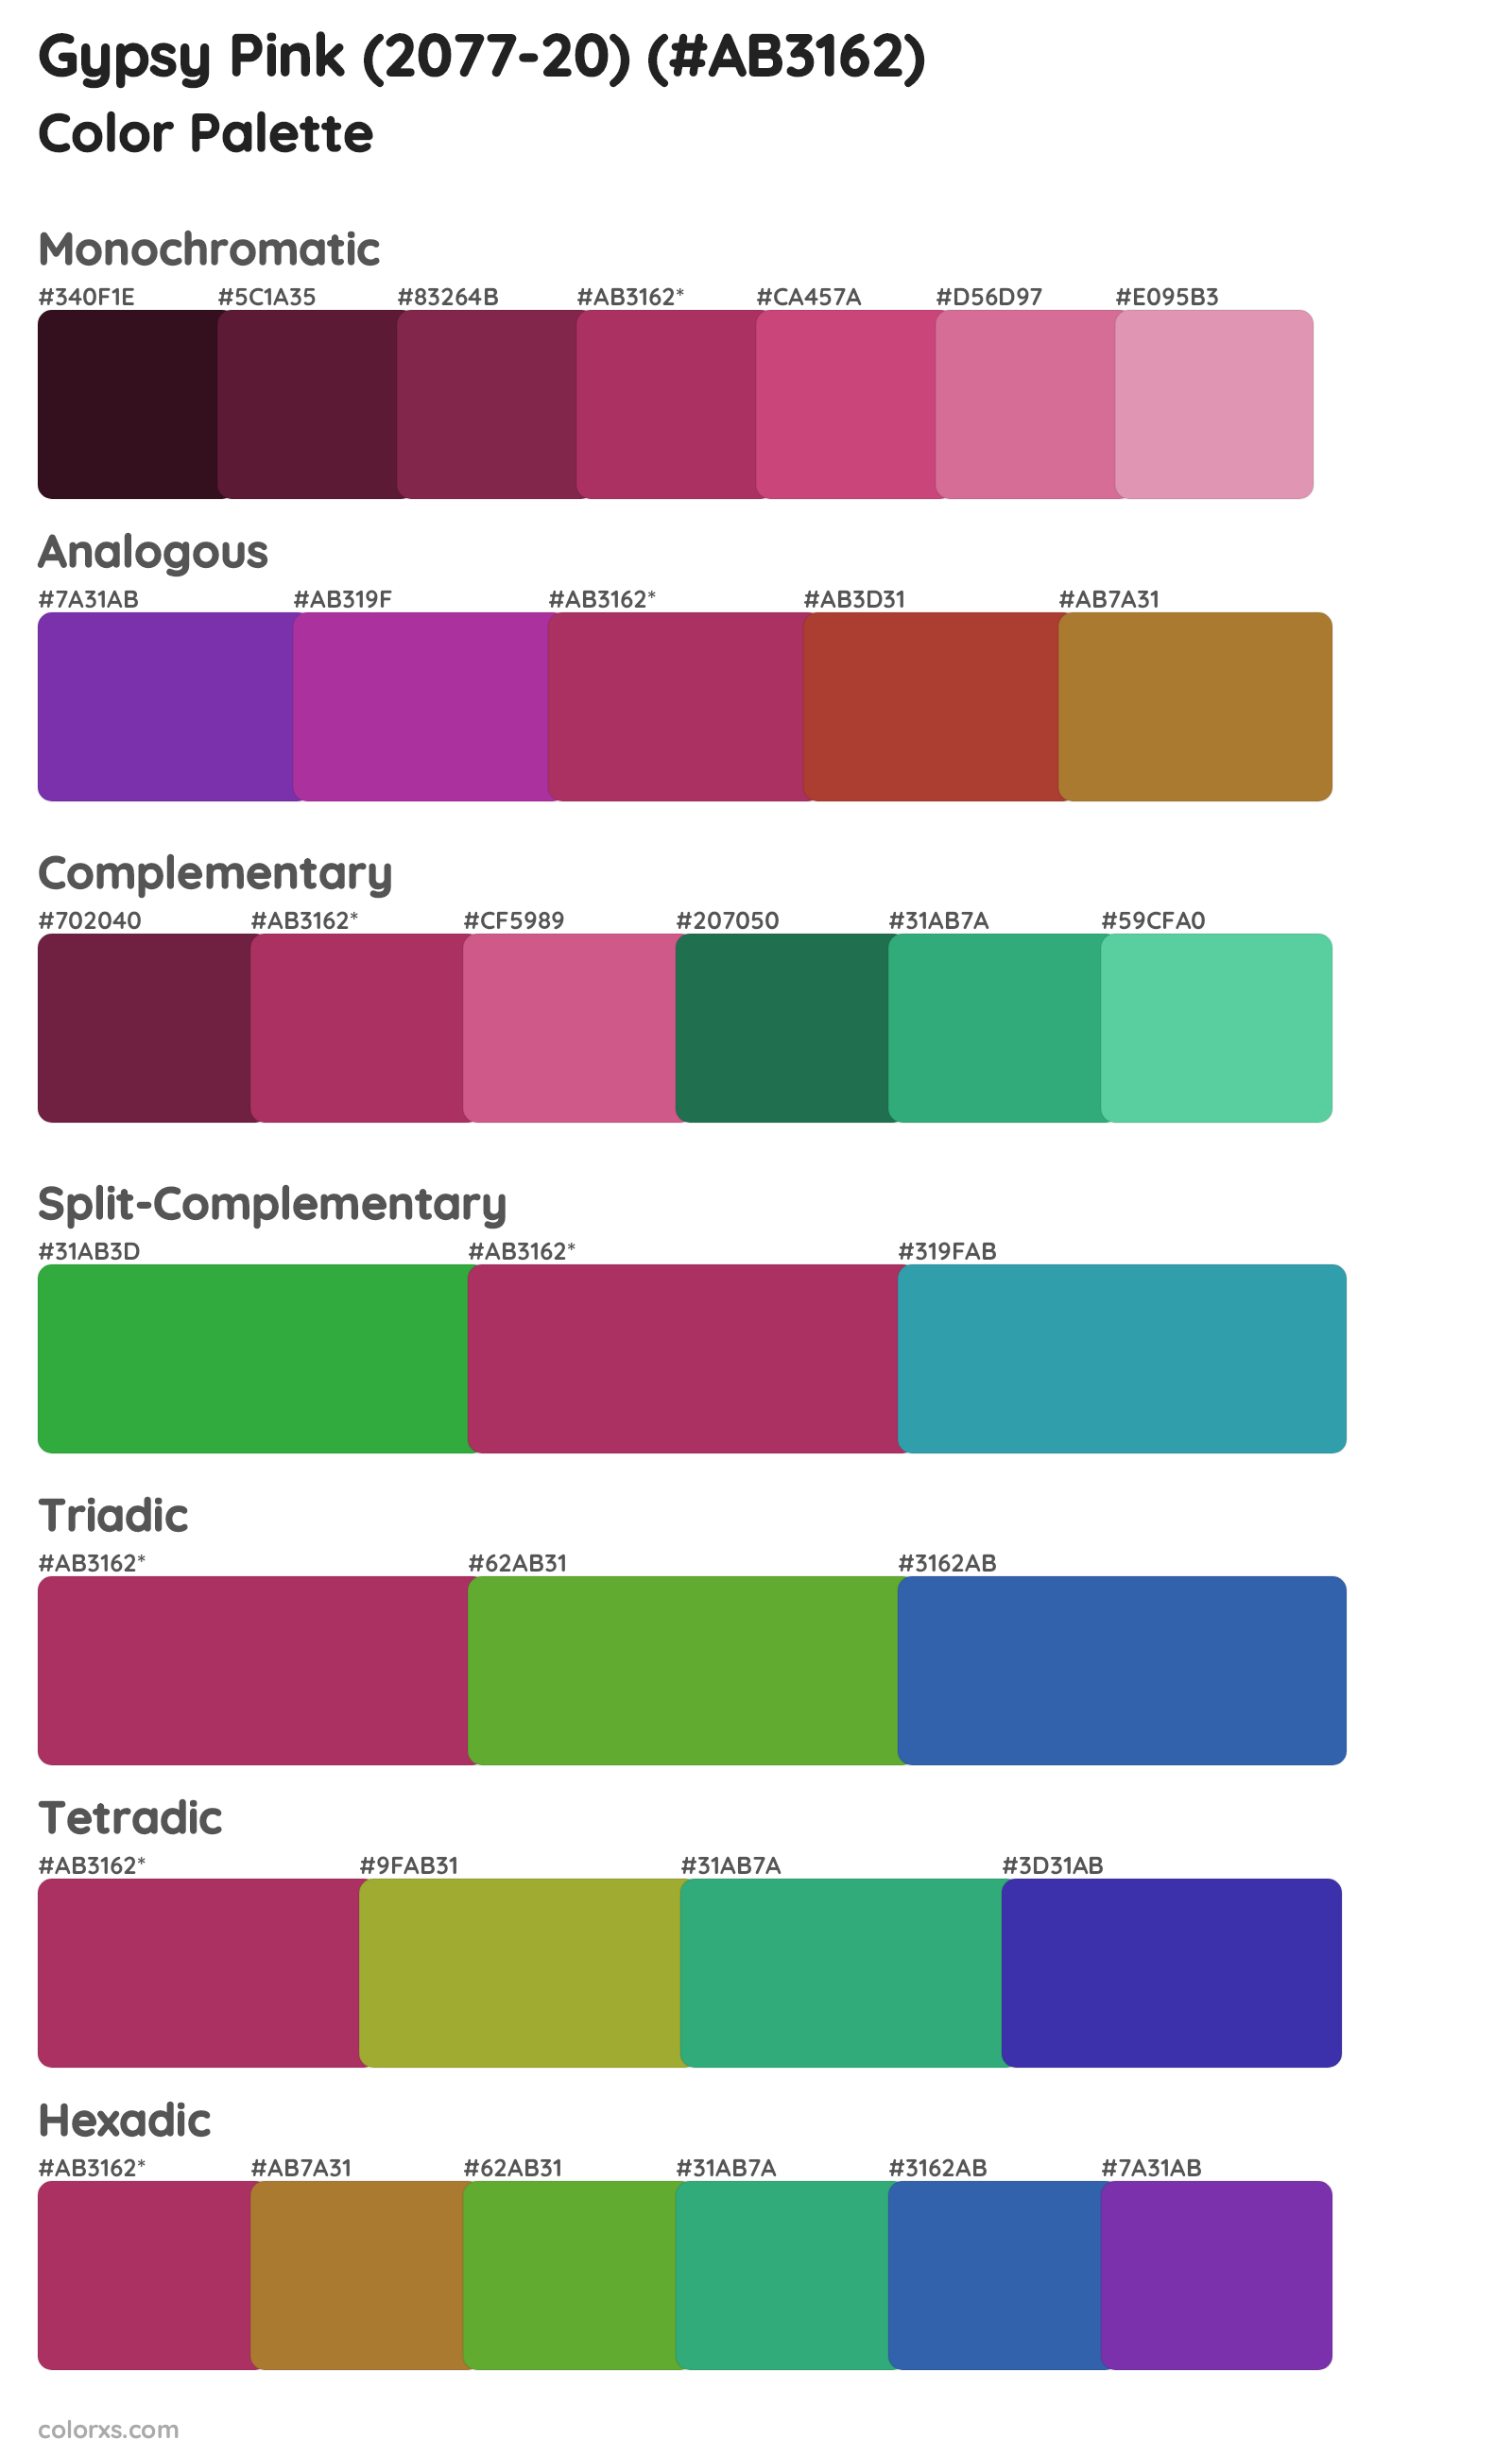 Gypsy Pink (2077-20) Color Scheme Palettes